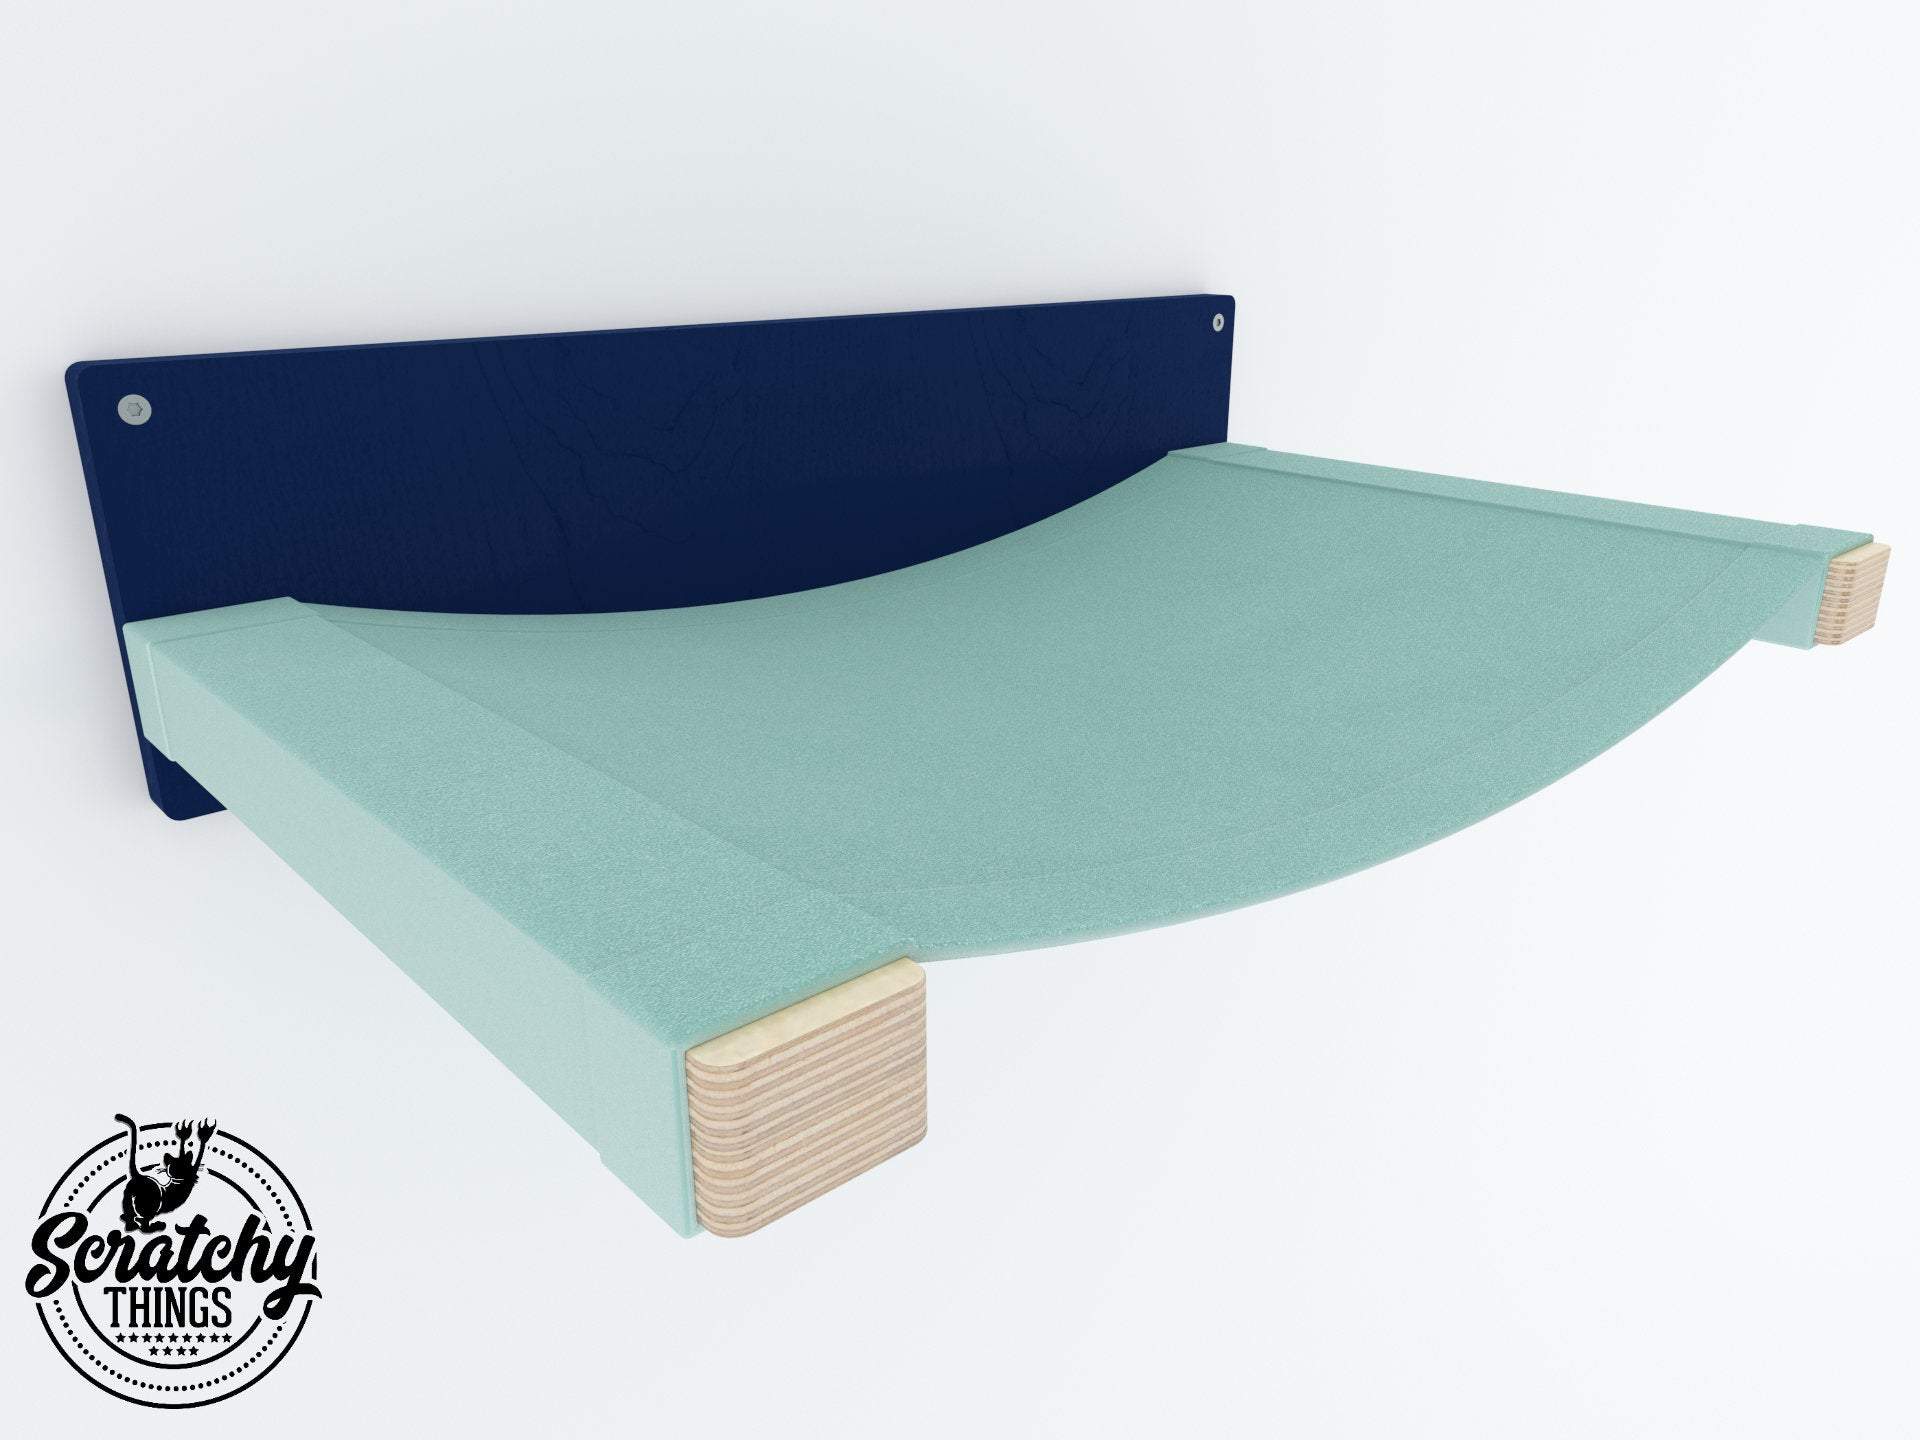 Big Cat Wall Shelf Bed Hammock - Wally BigCat Cot - Scratchy Things Premium Pet Furniture